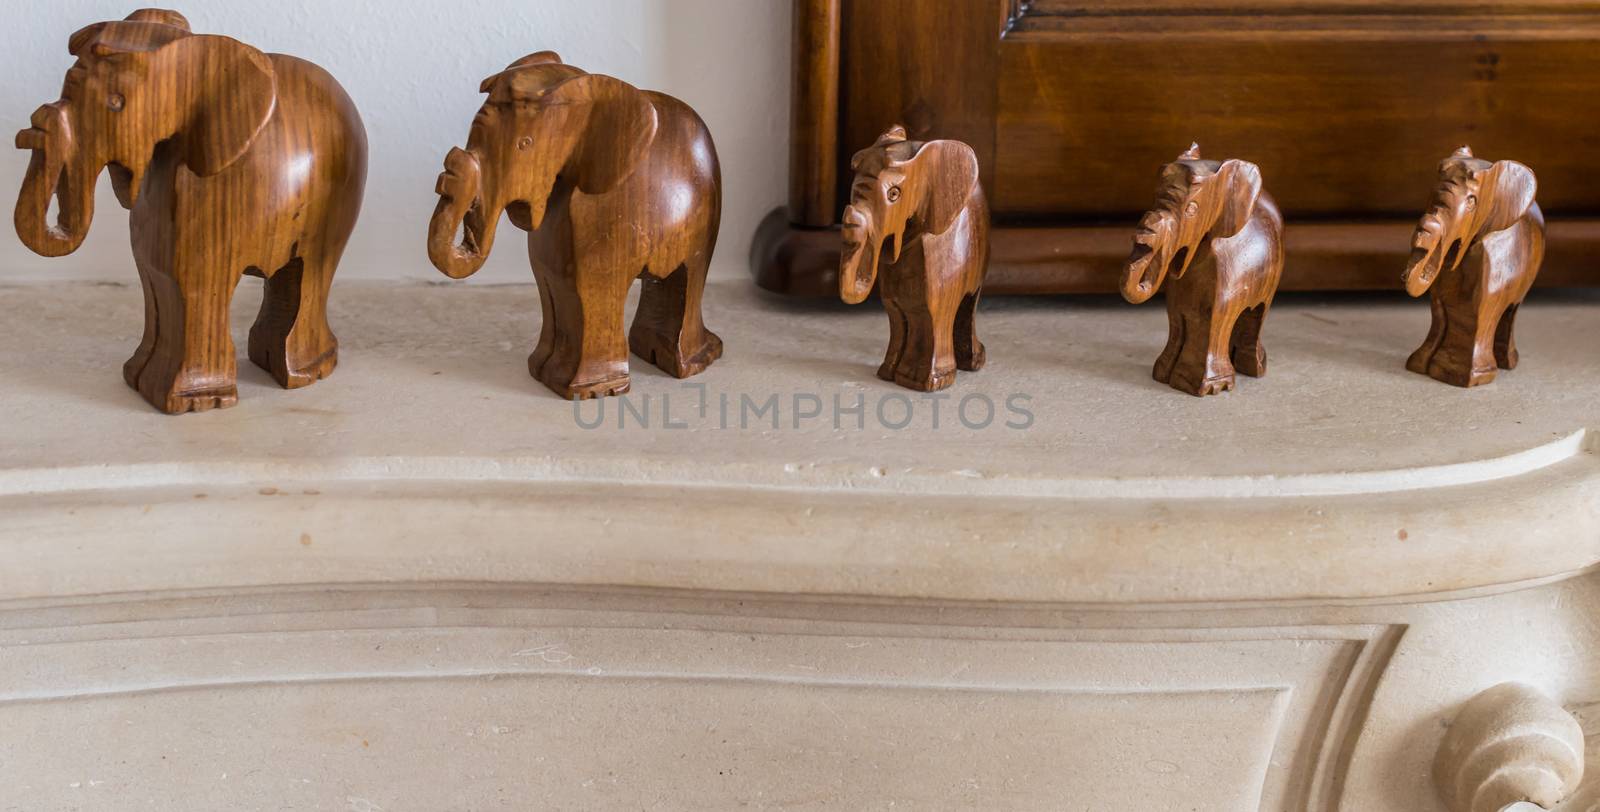 Carved wooden elephants on pedestal by okskukuruza